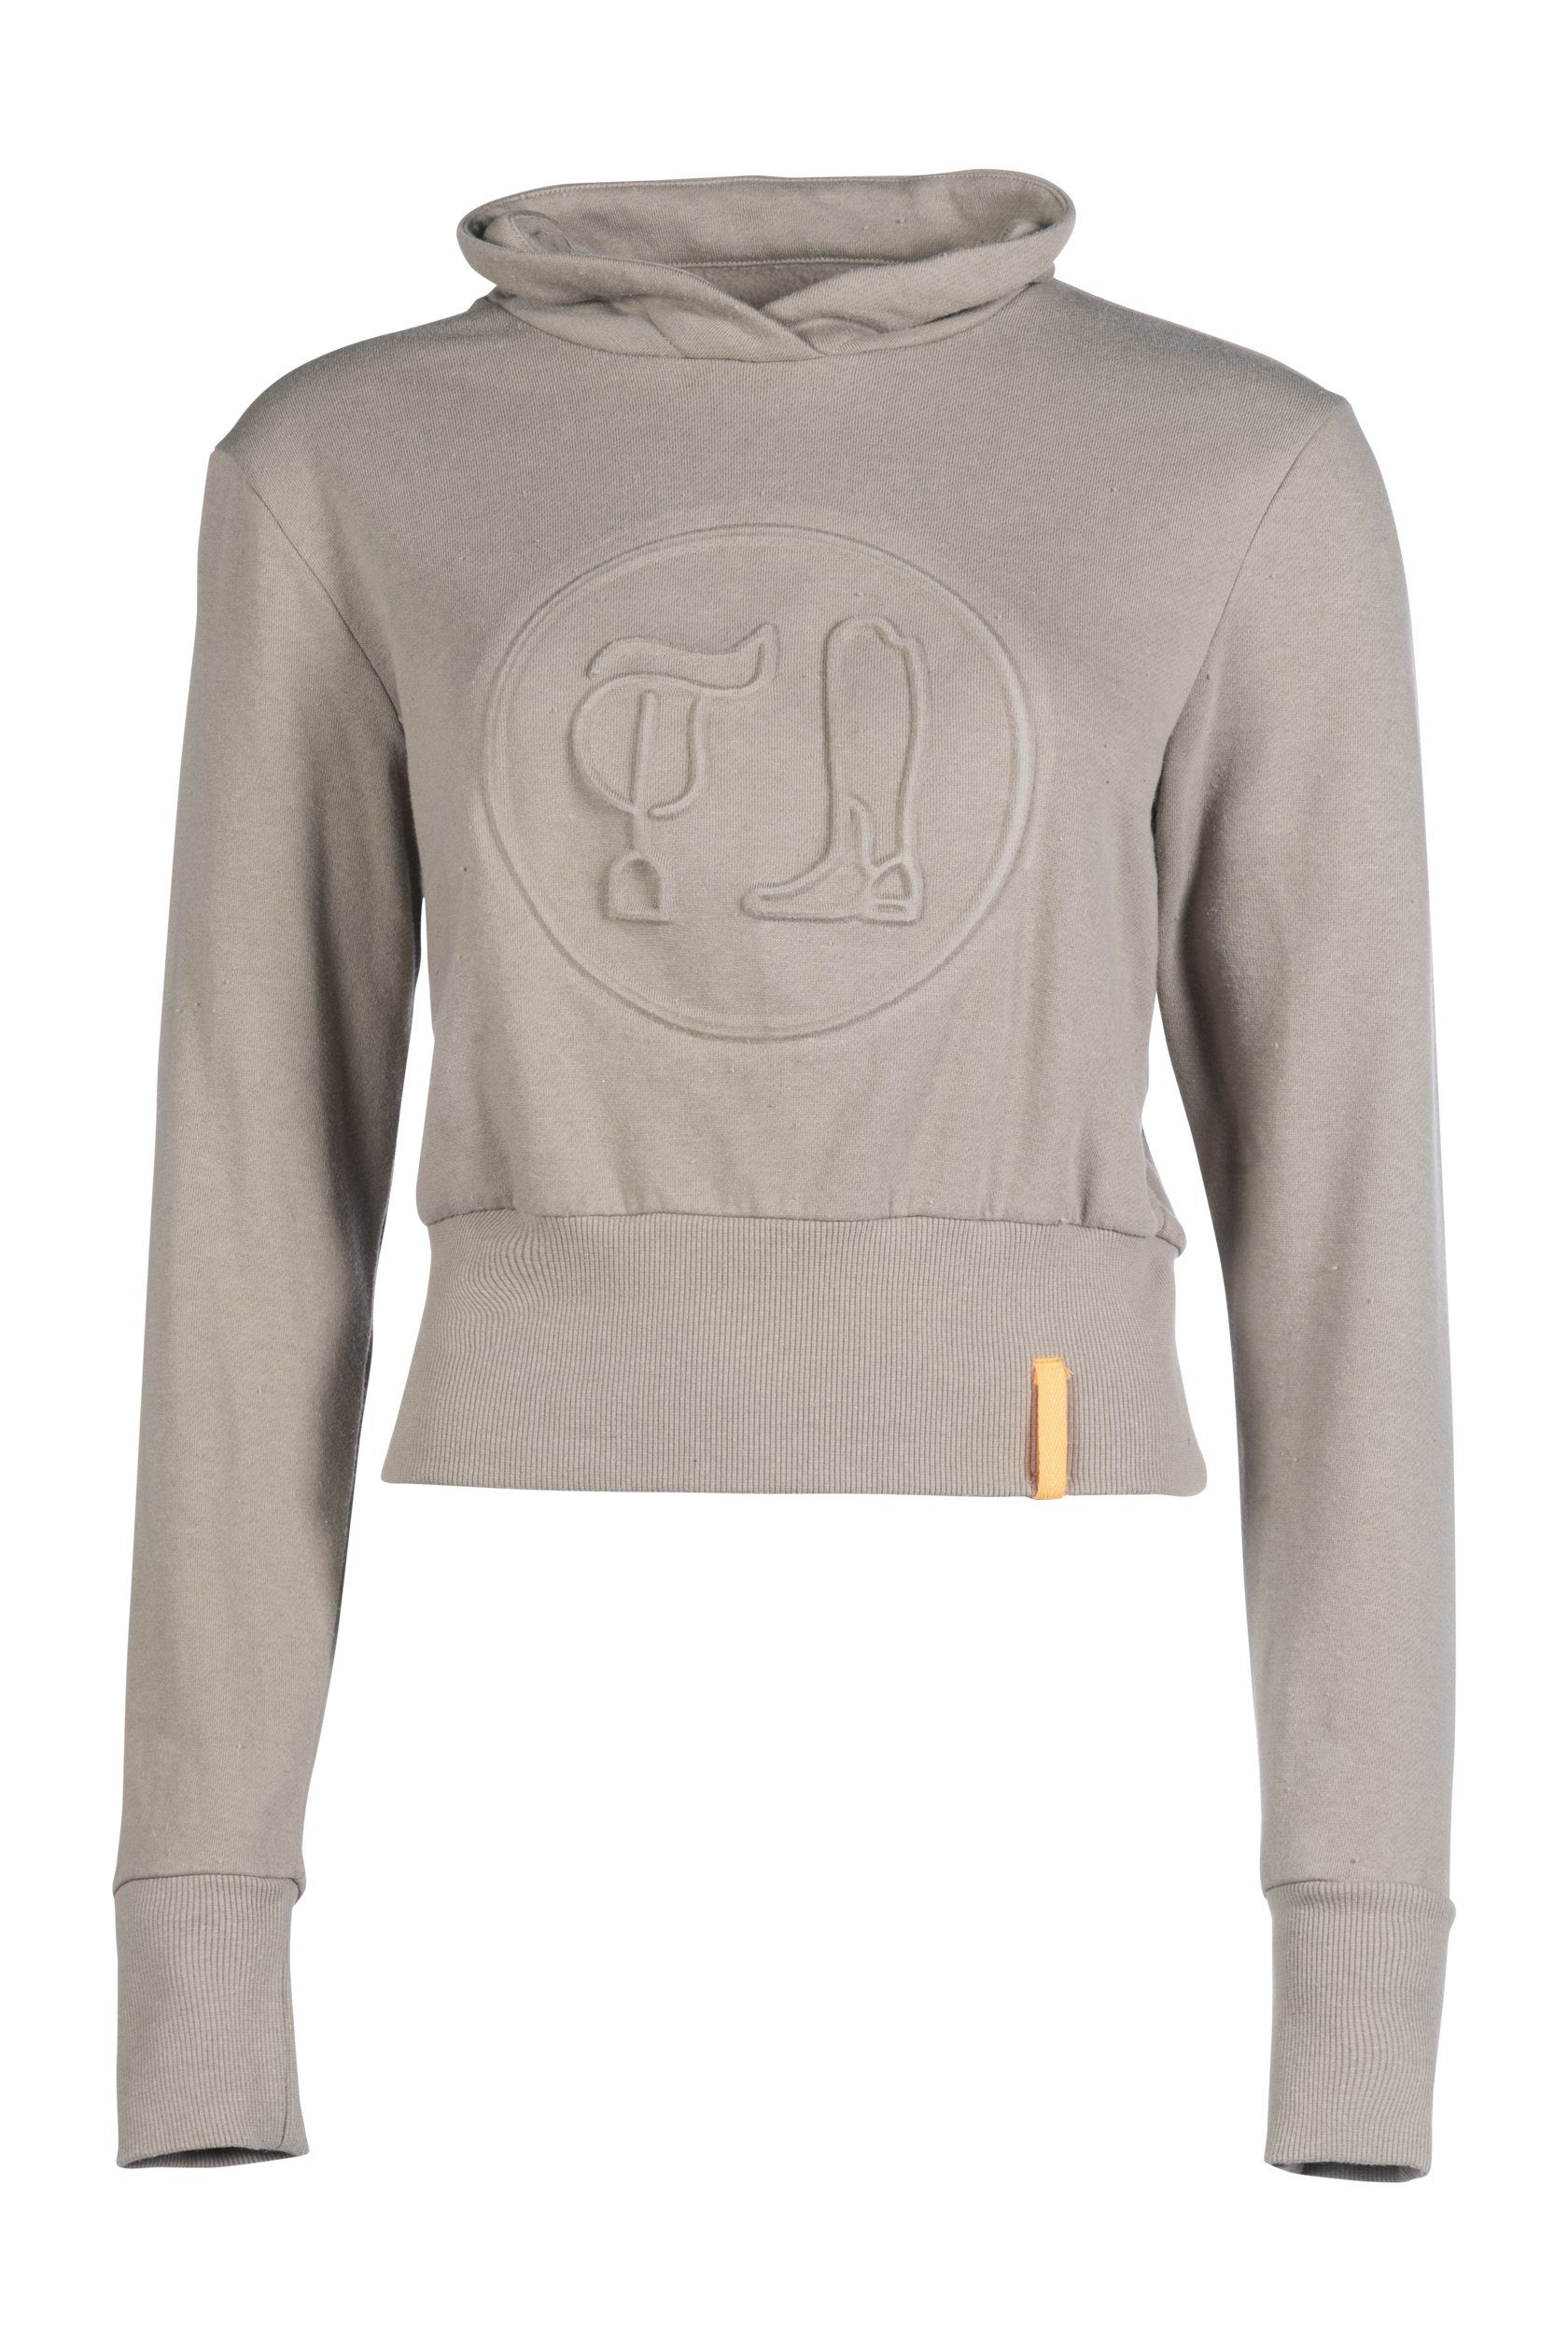 HKM Sweater Sweatshirt -Lyon-